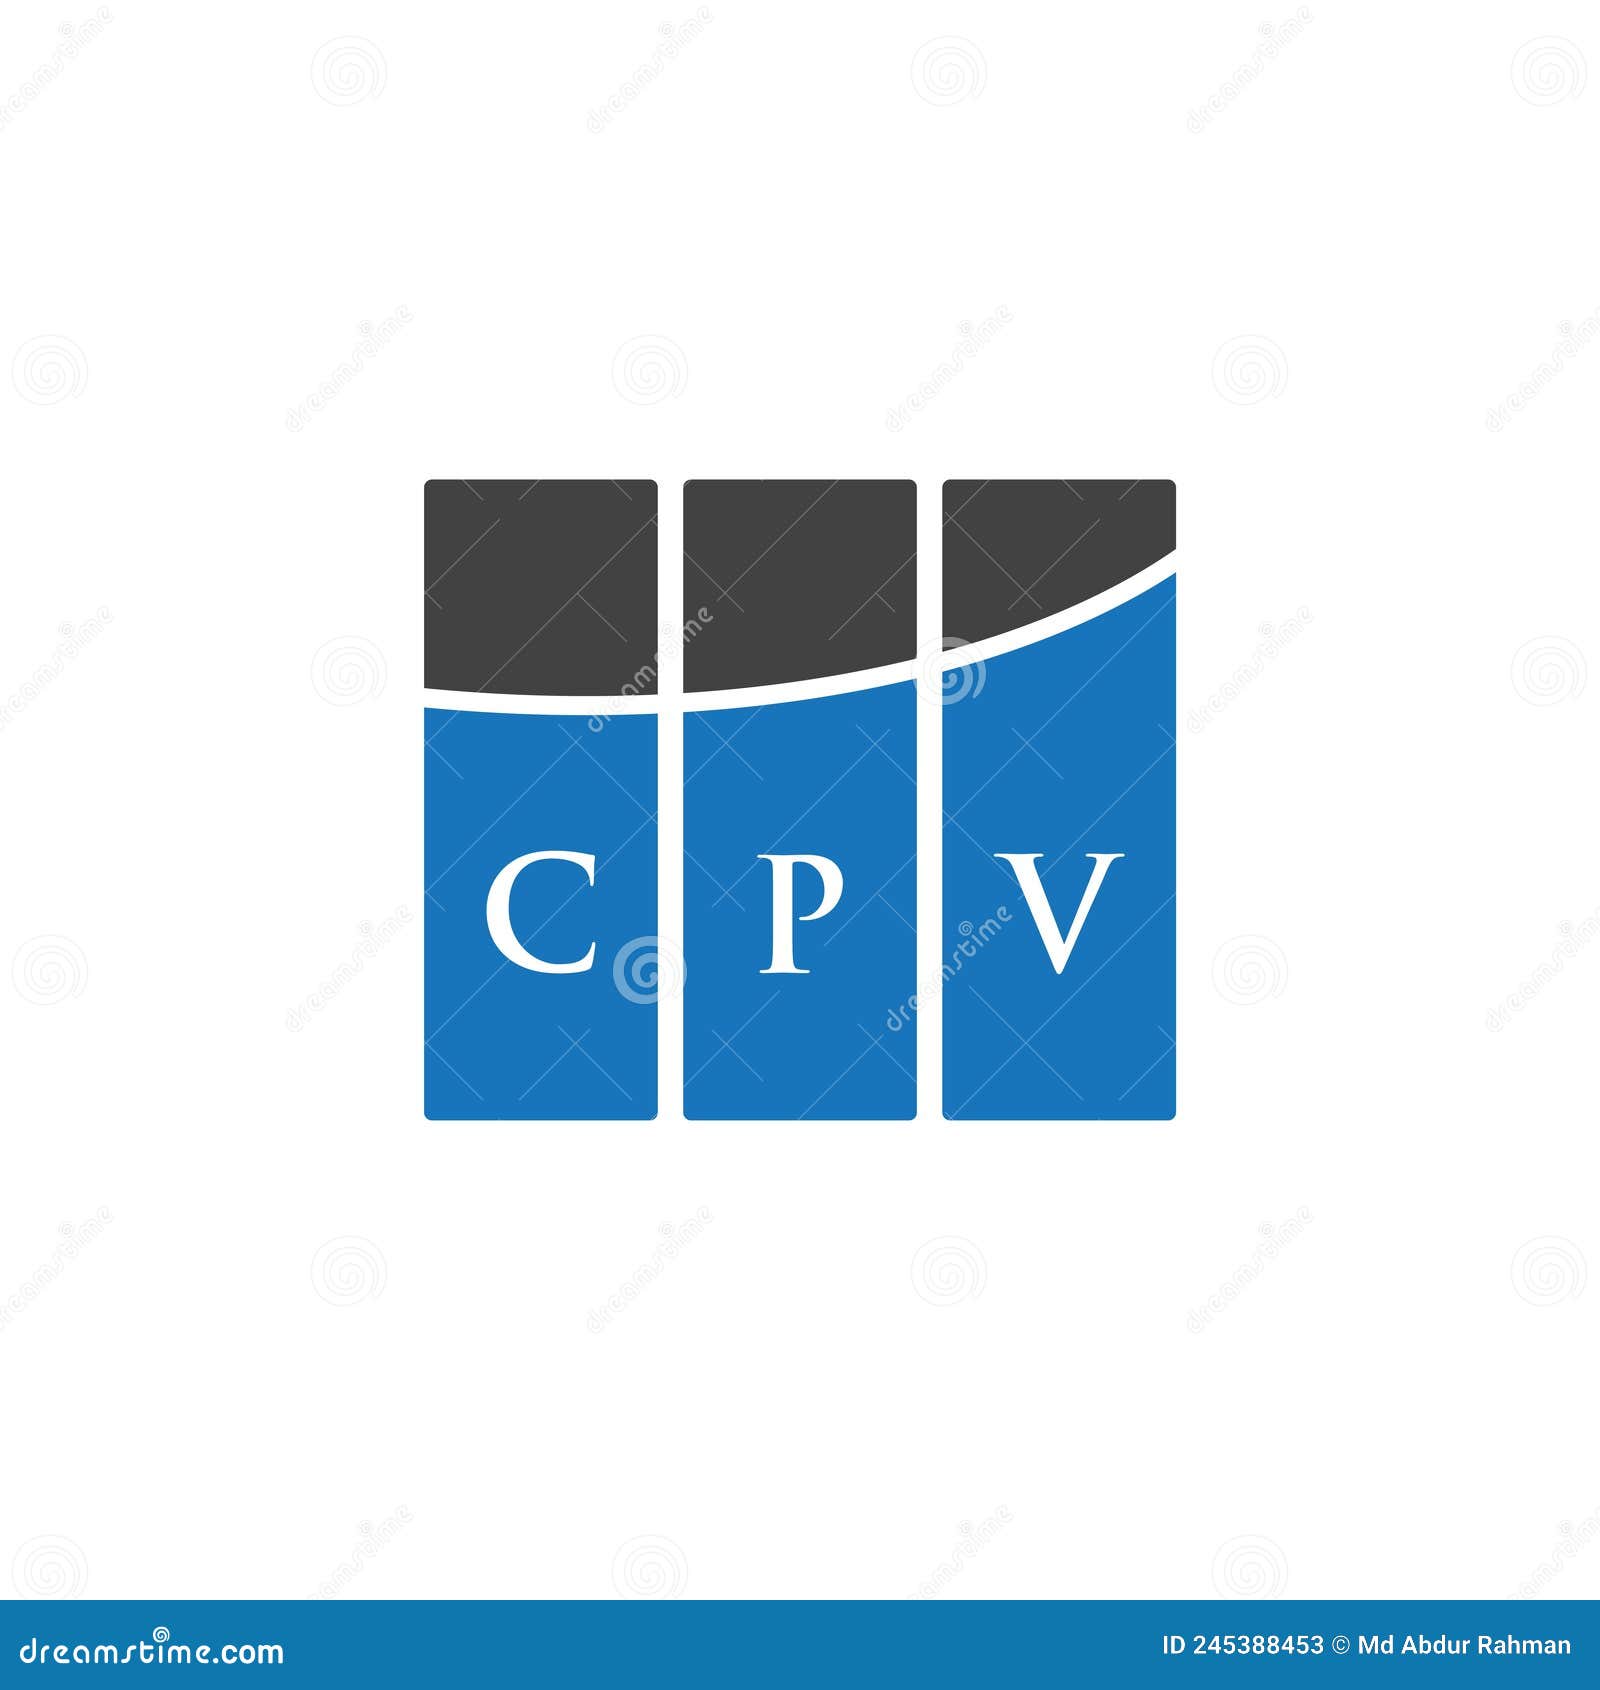 cpv letter logo  on black background. cpv creative initials letter logo concept. cpv letter 